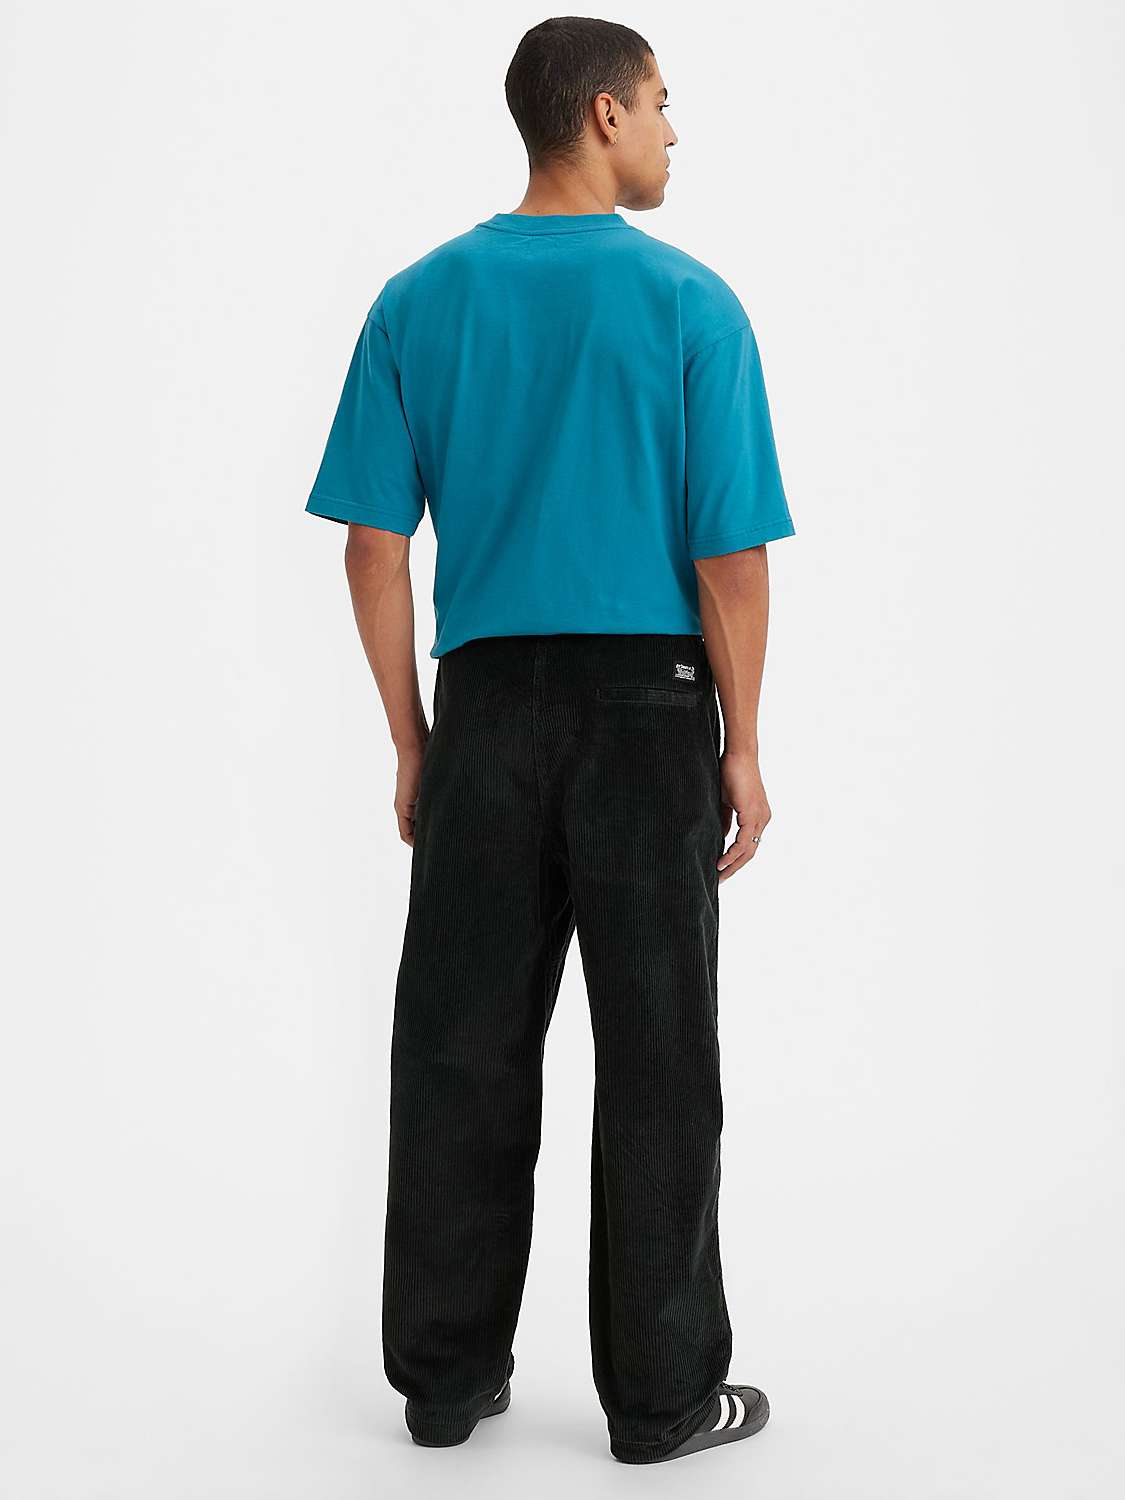 Buy Levi's Skate Release Trousers, Black Online at johnlewis.com